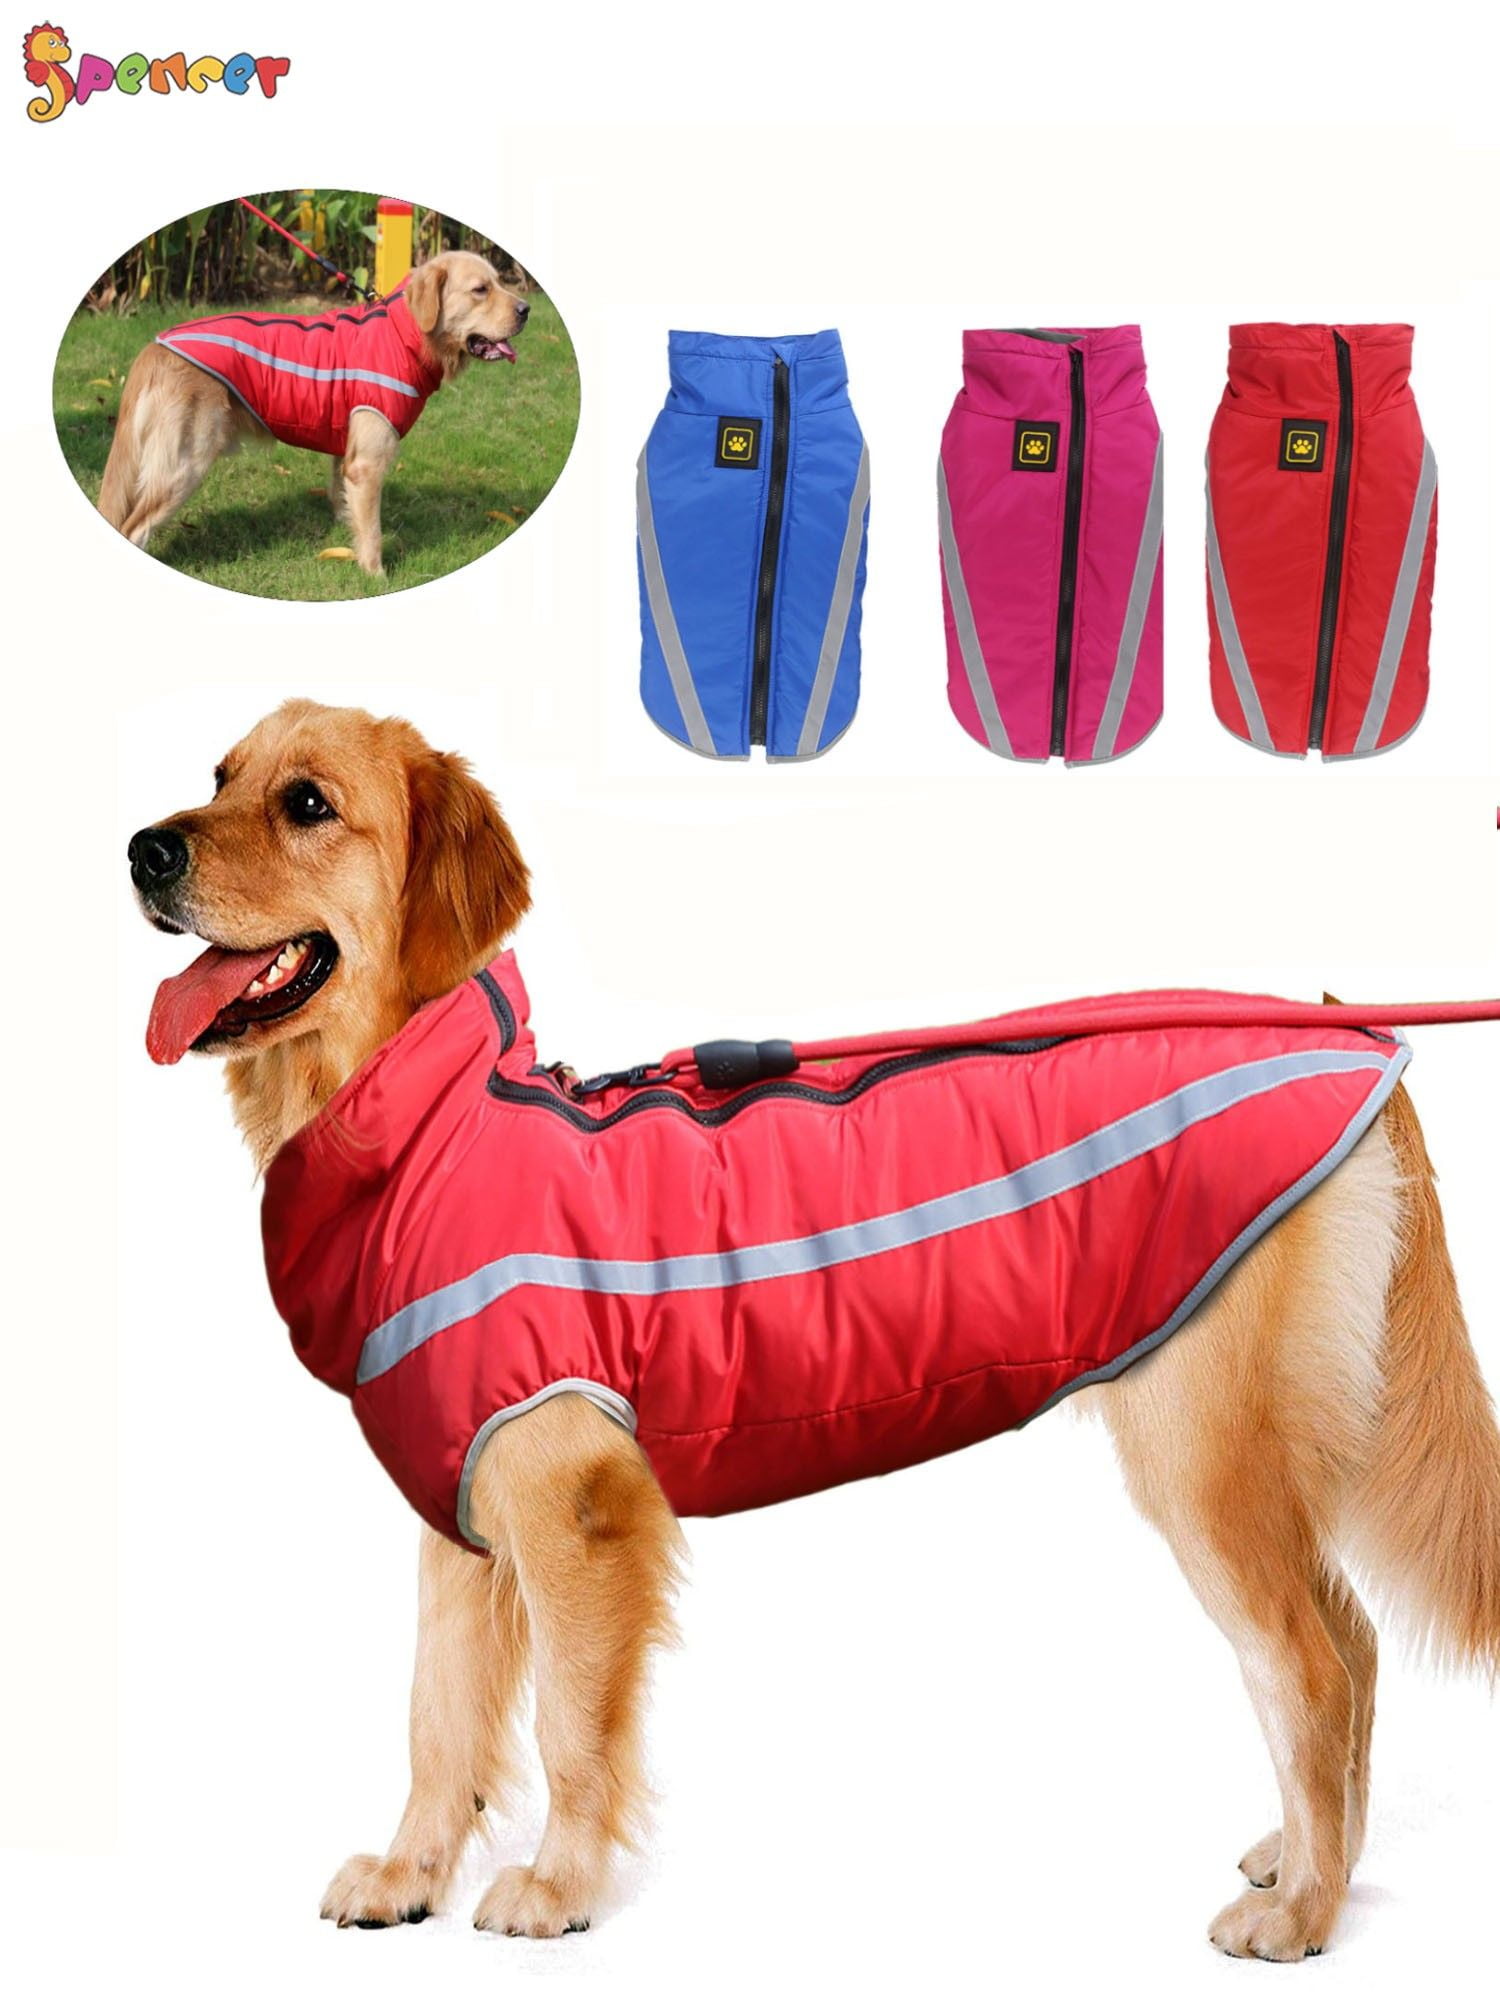 Waterproof Large Dog Coat Jackets Winter Warm Reflective Pet Clothing Outfits 